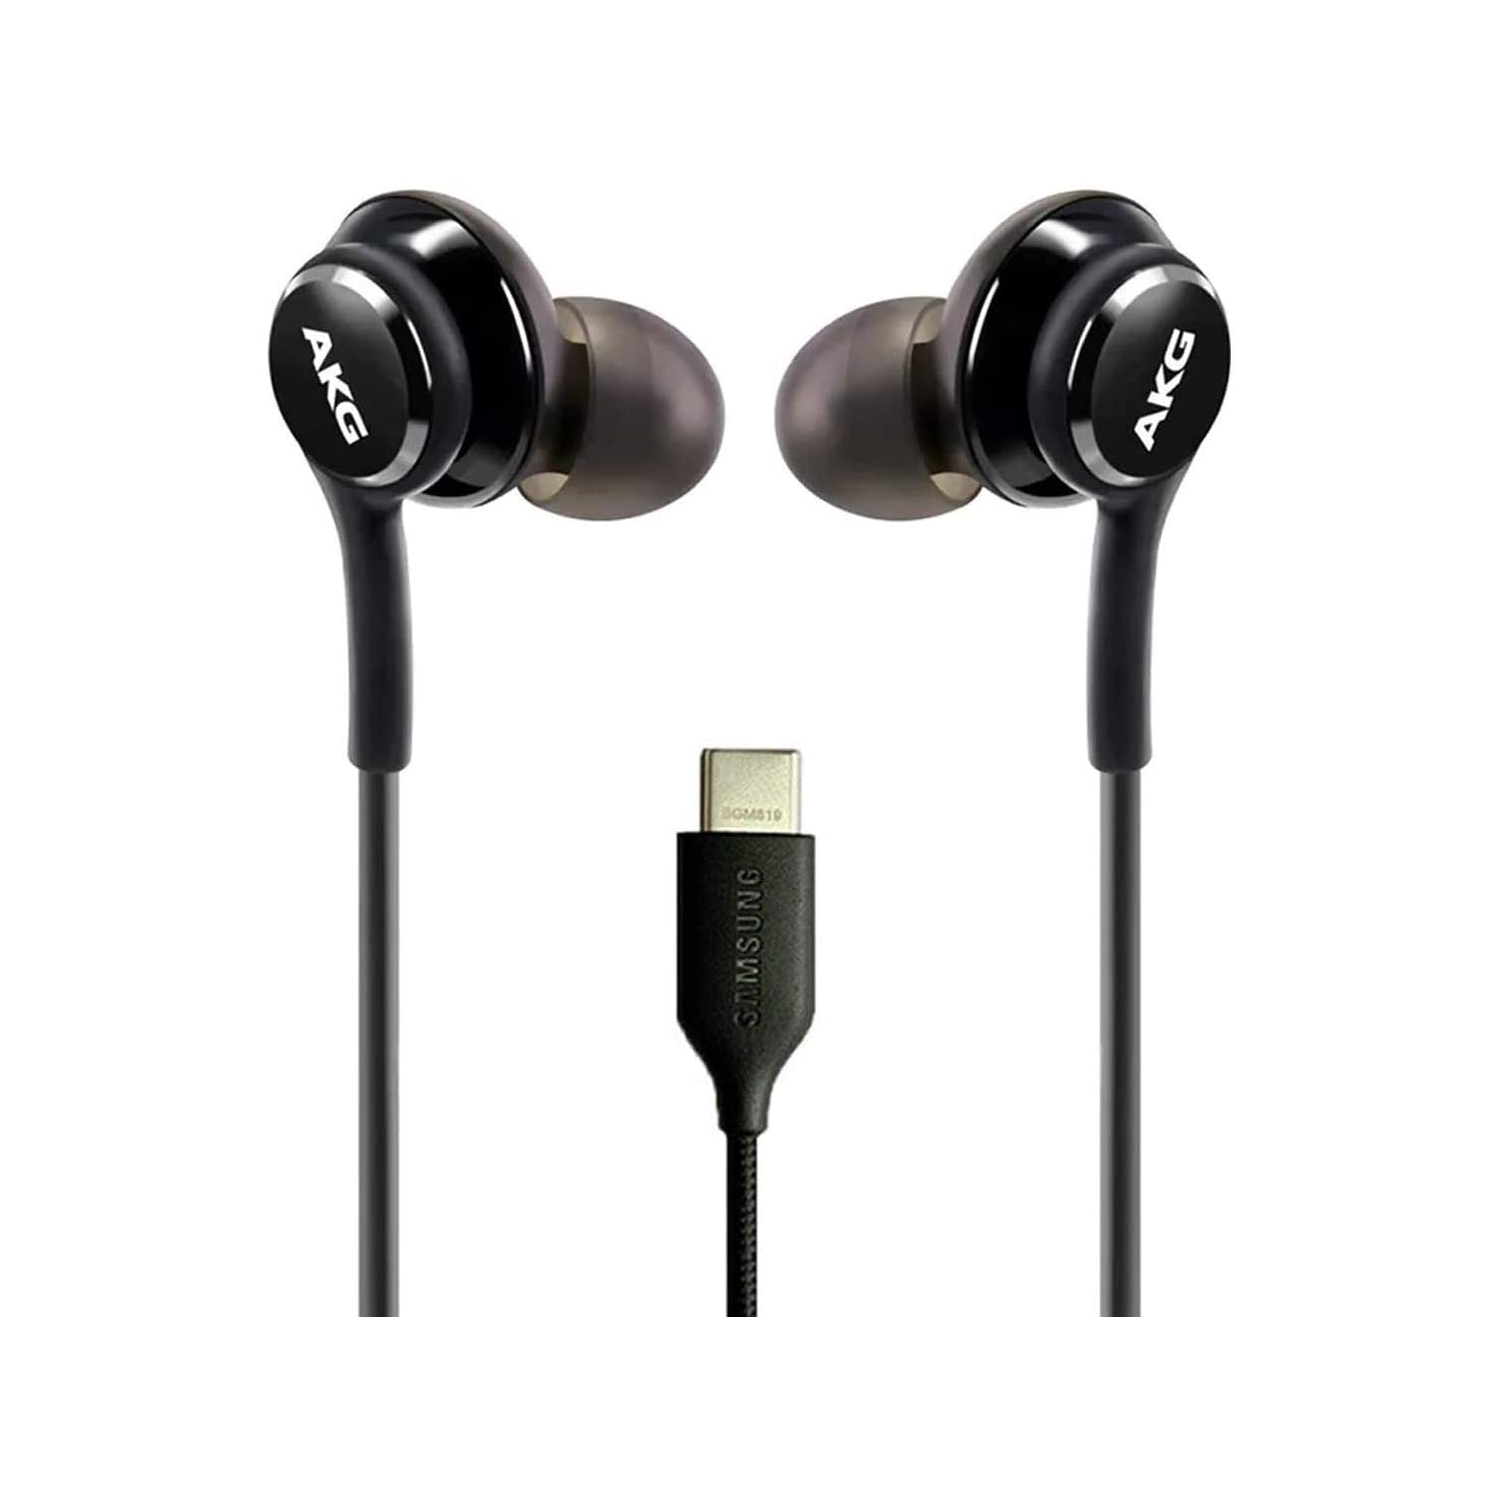 |HWS| AKG Type USB-C Connector Stereo Headsets Headphones Earphones & Mic for Samsung S9 S10 S20 Note 8 9 Plus, Black